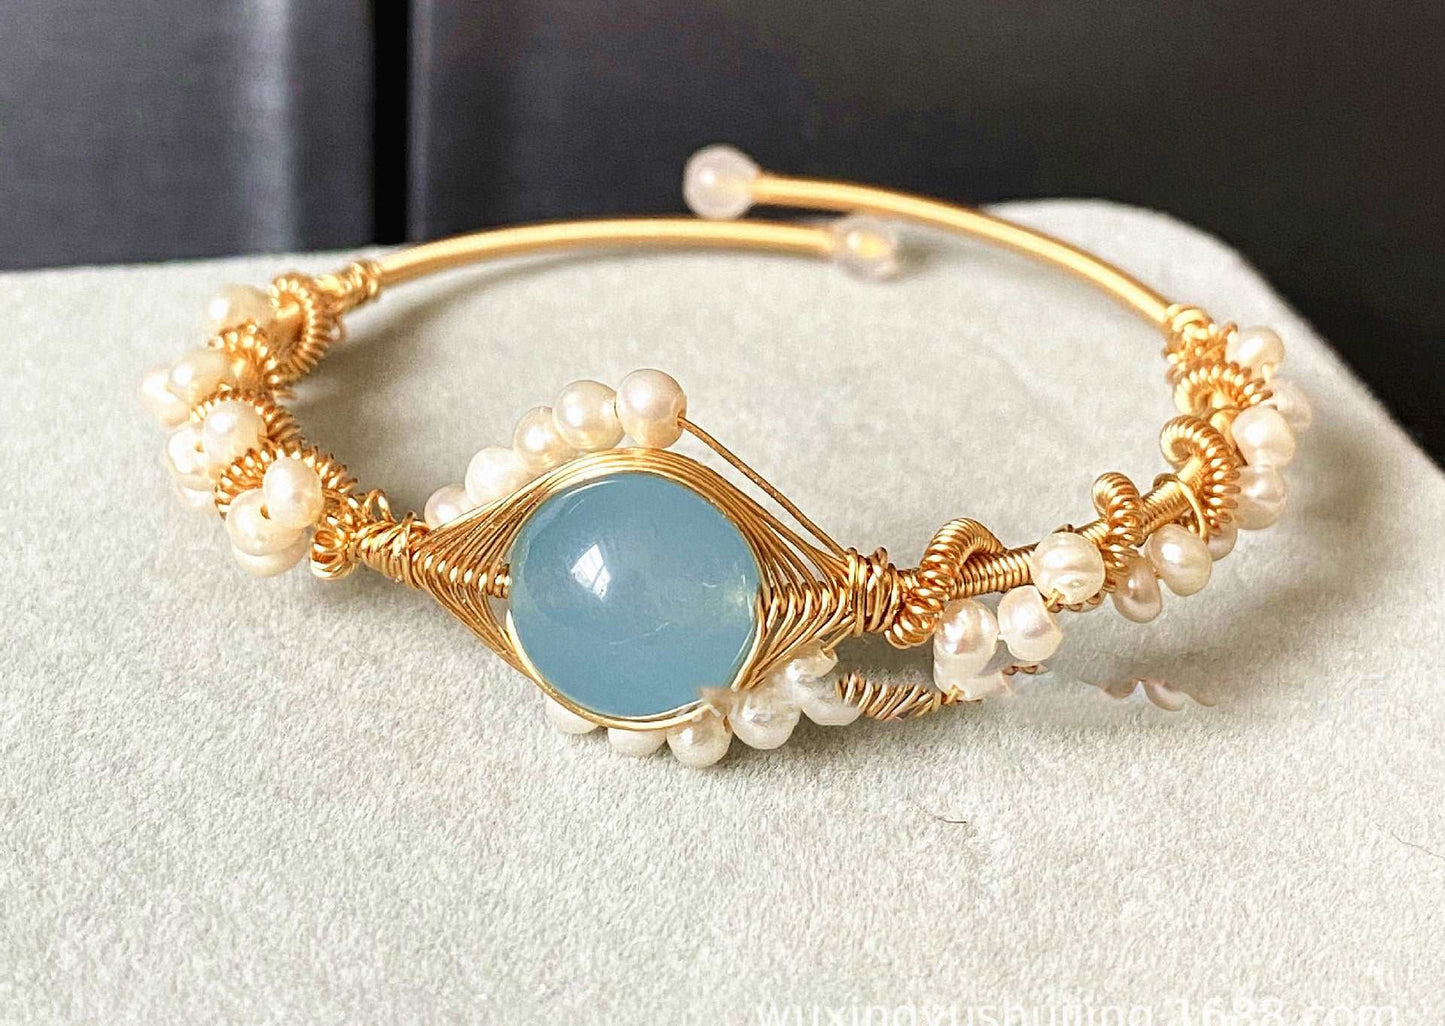 14K GoldWrapped Handmade Bracelet Hailan Baohai Sapphire Natural White Pearl Bracelet - Jps collections